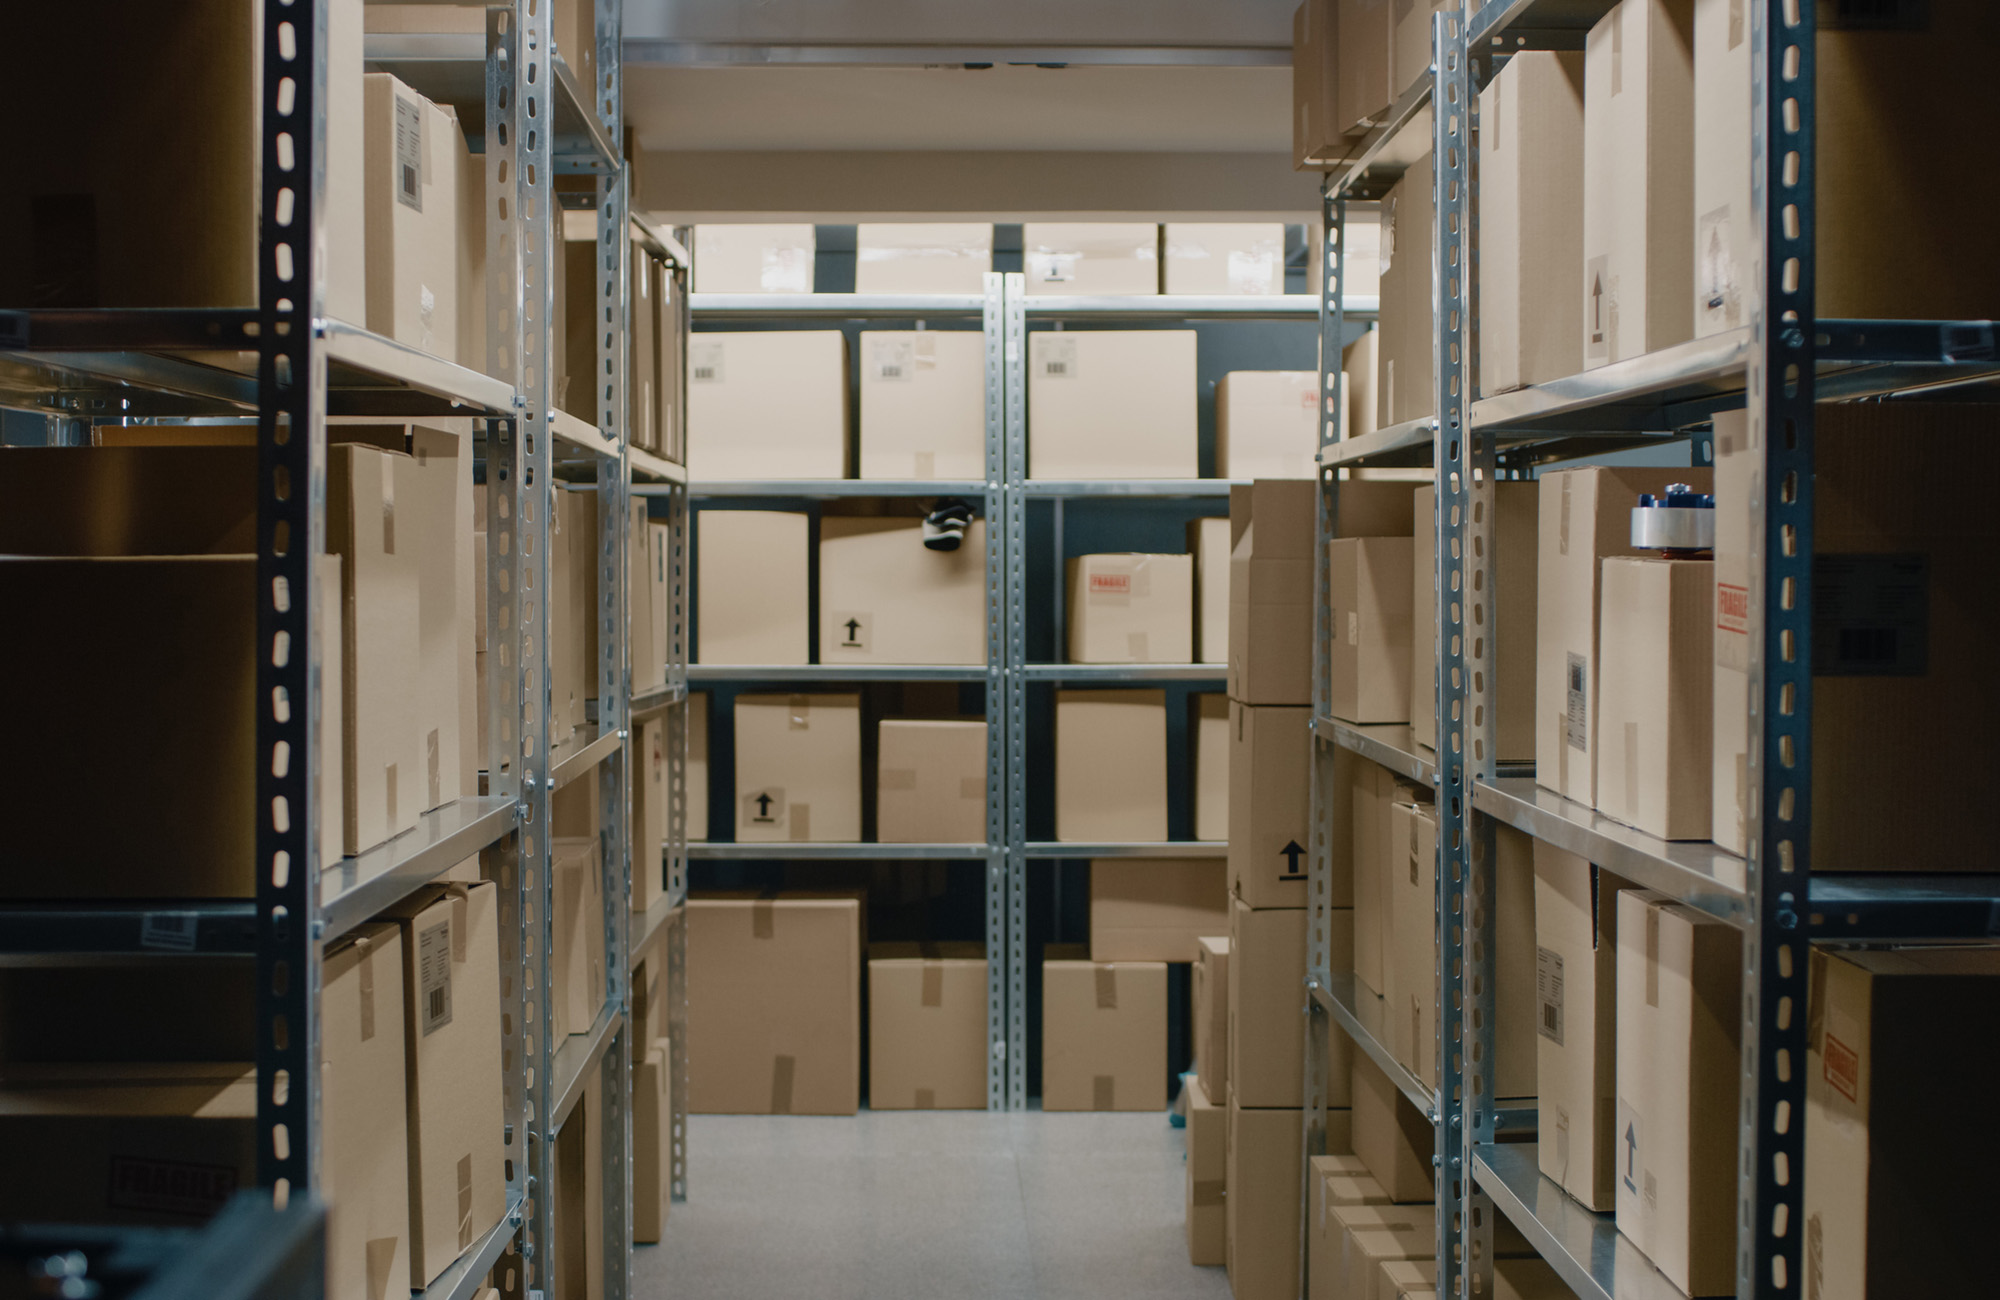 Archive Storage at Kangaroo Self Storage | All Inclusive Price